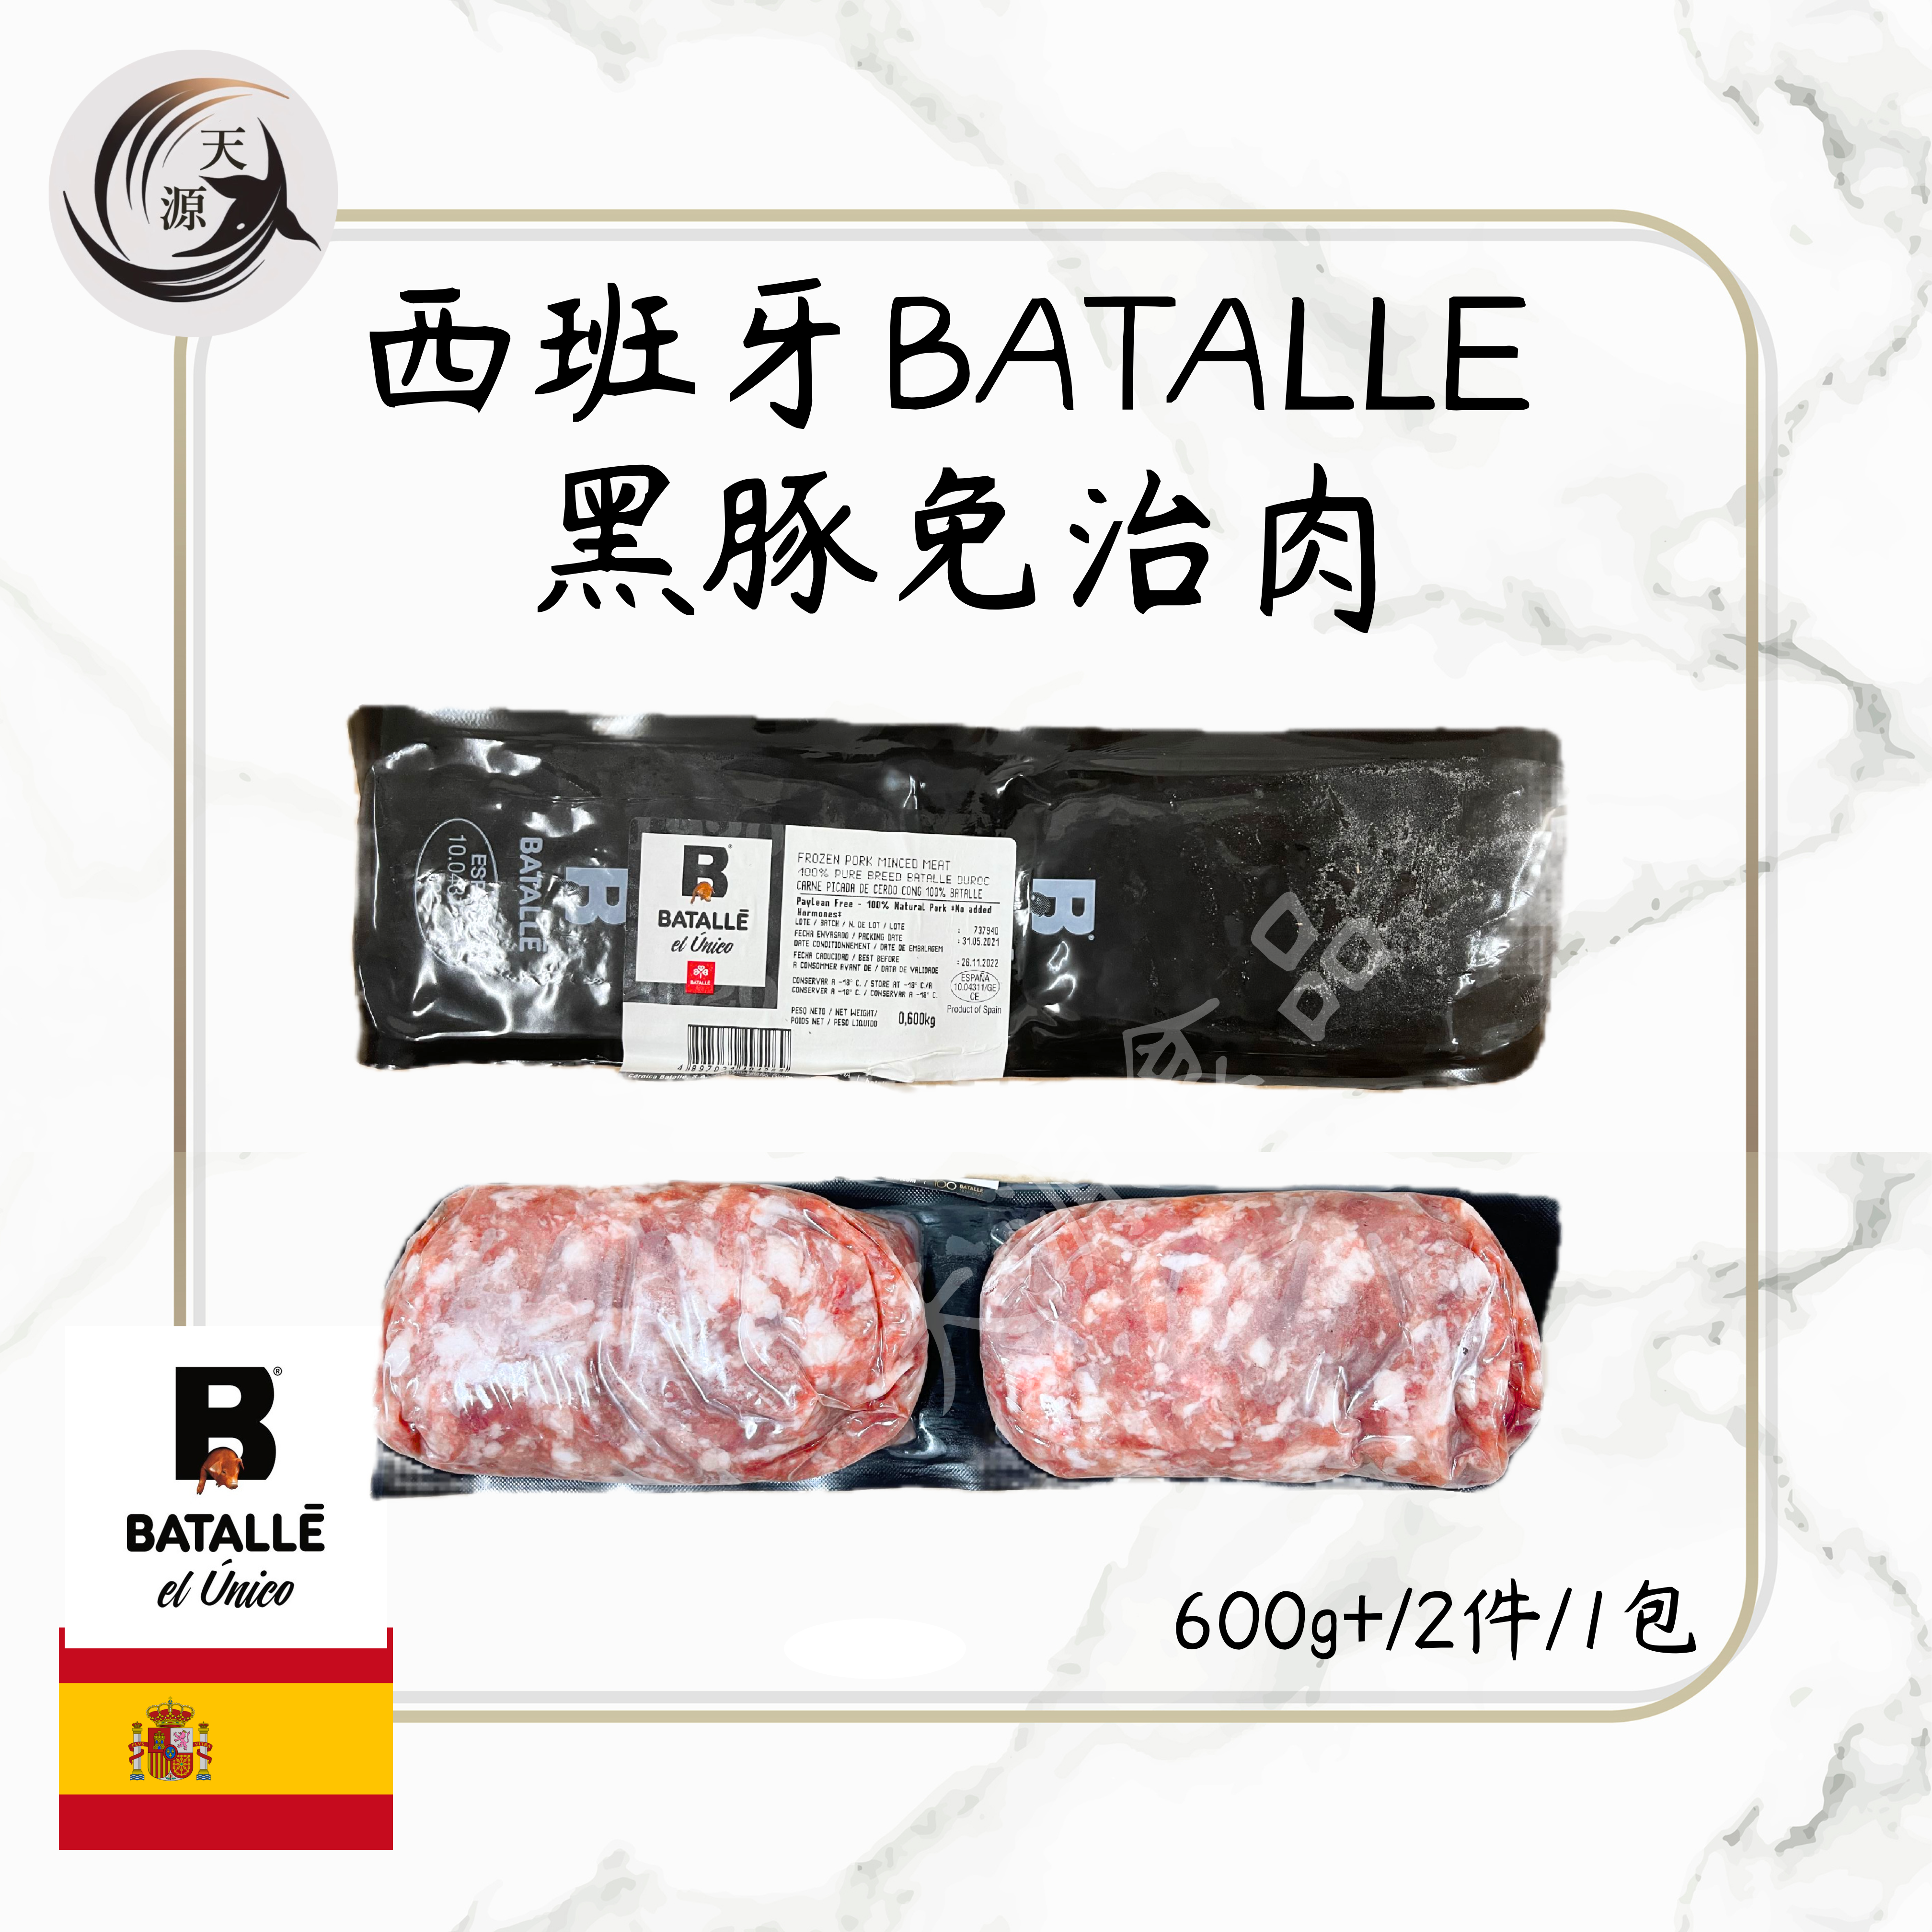 Spanish BATALLE black dolphin free meat 600g